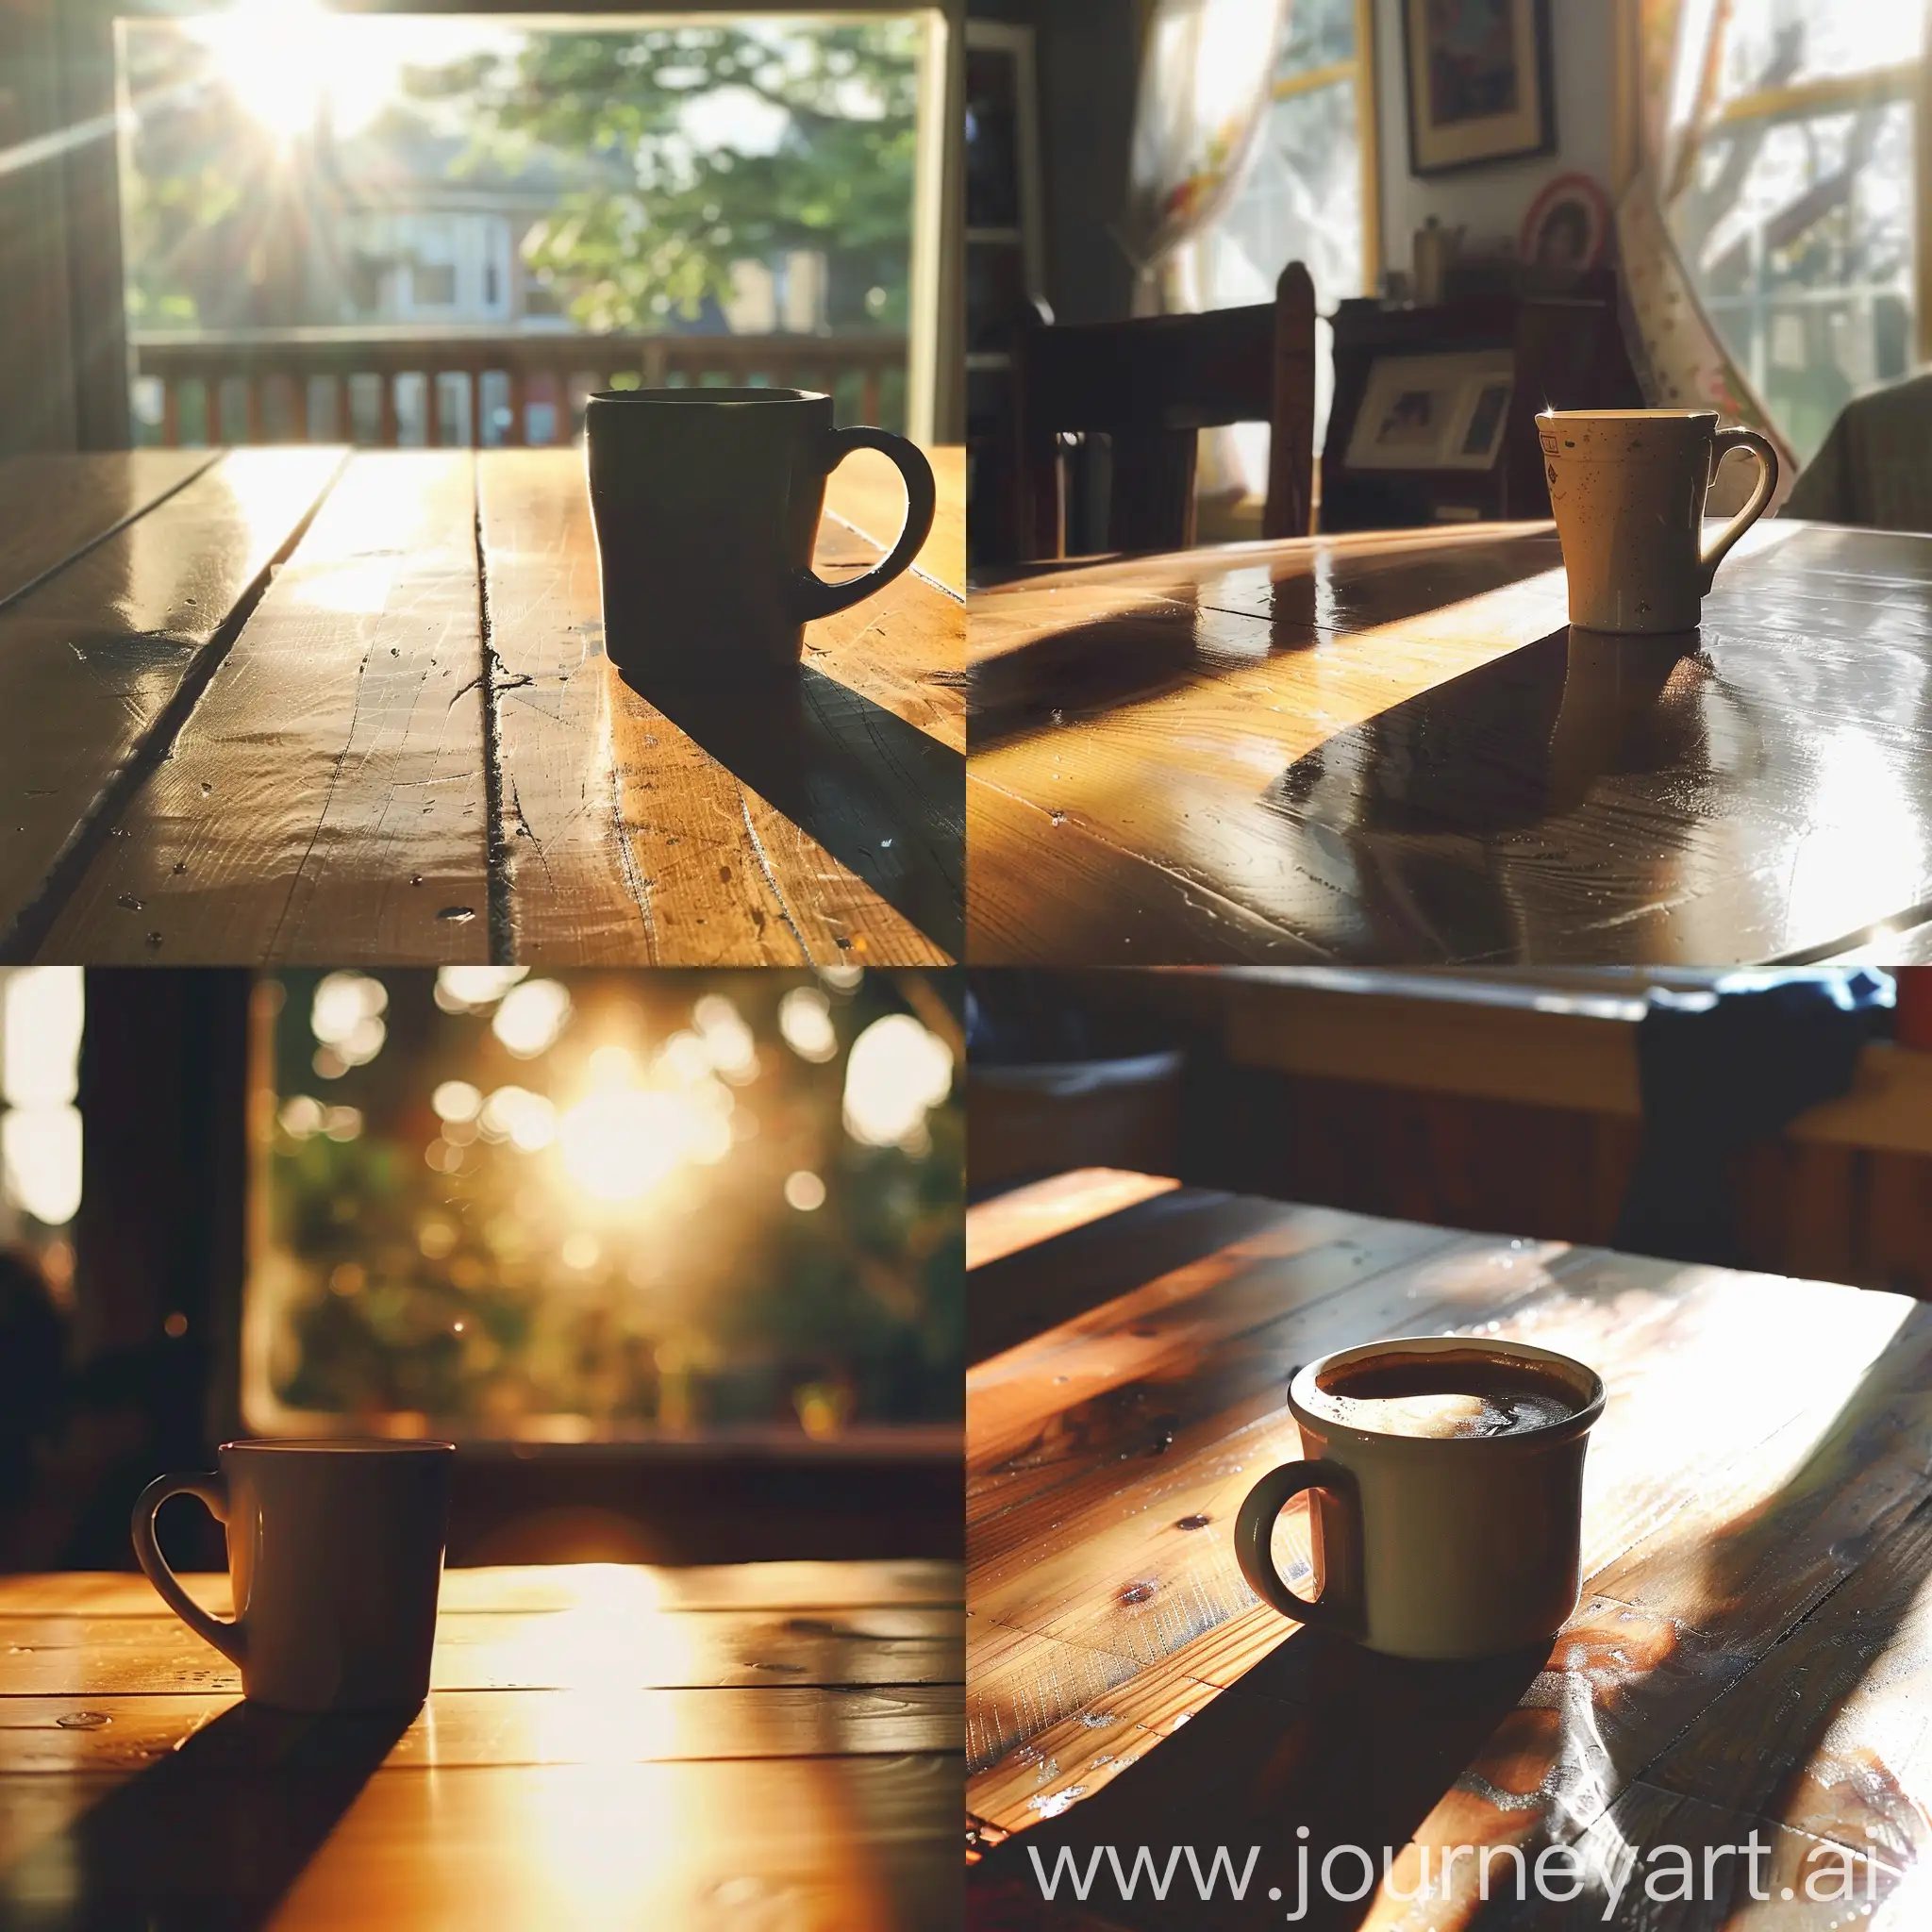 Sunlit-Morning-Coffee-on-Table-with-Mug